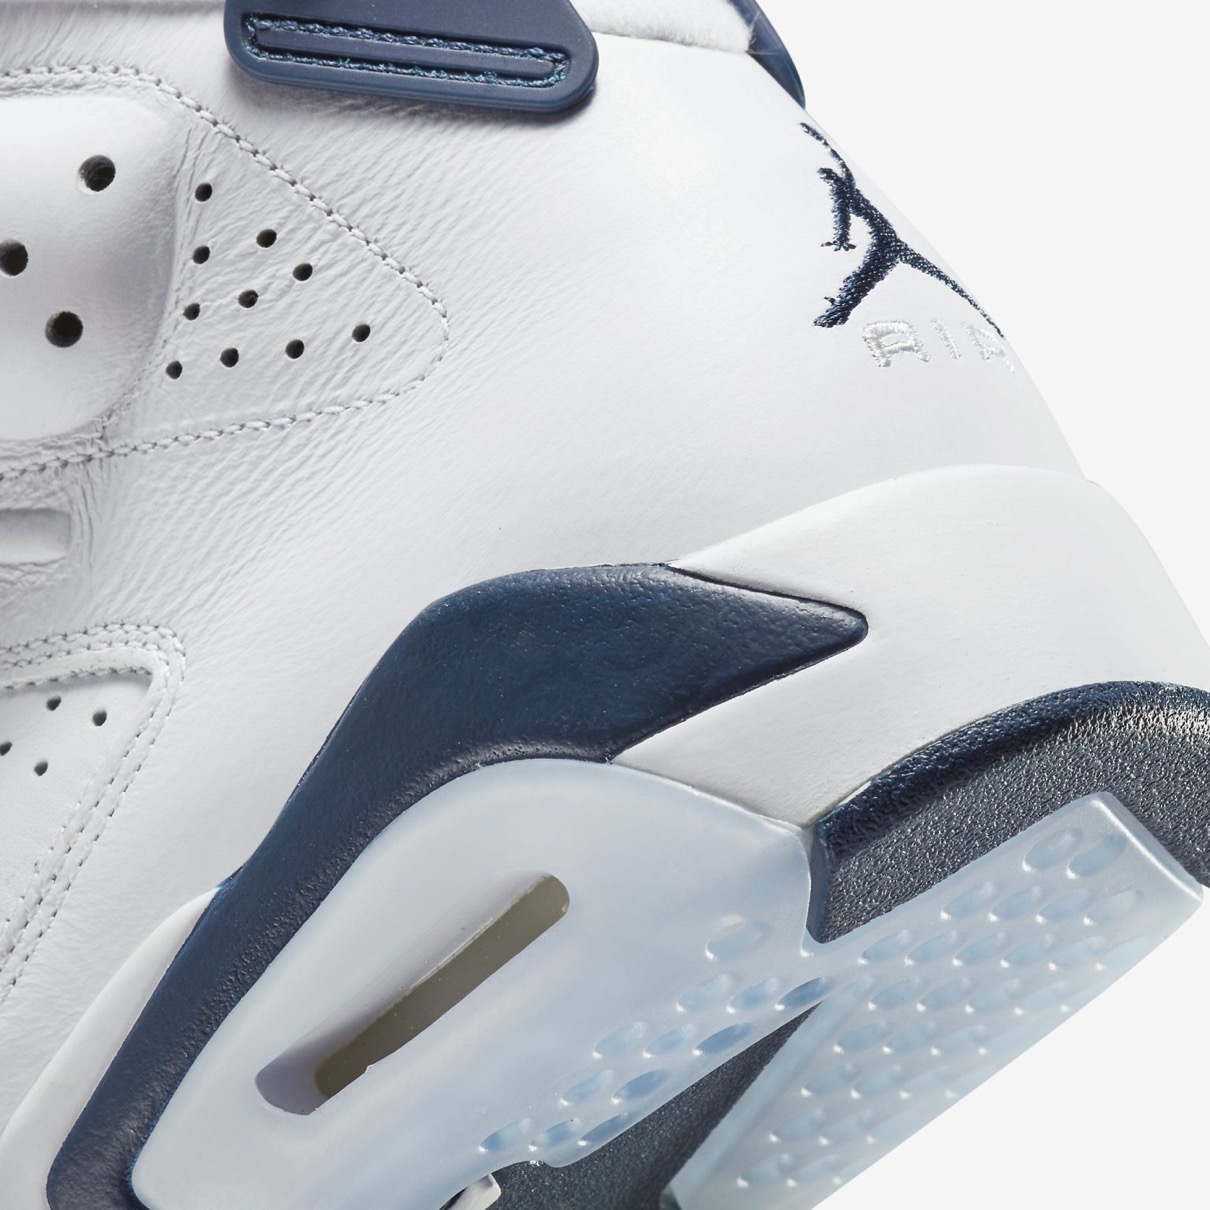 Nike】Air Jordan 6 Retro “Midnight Navy”が国内5月7日に復刻発売予定 